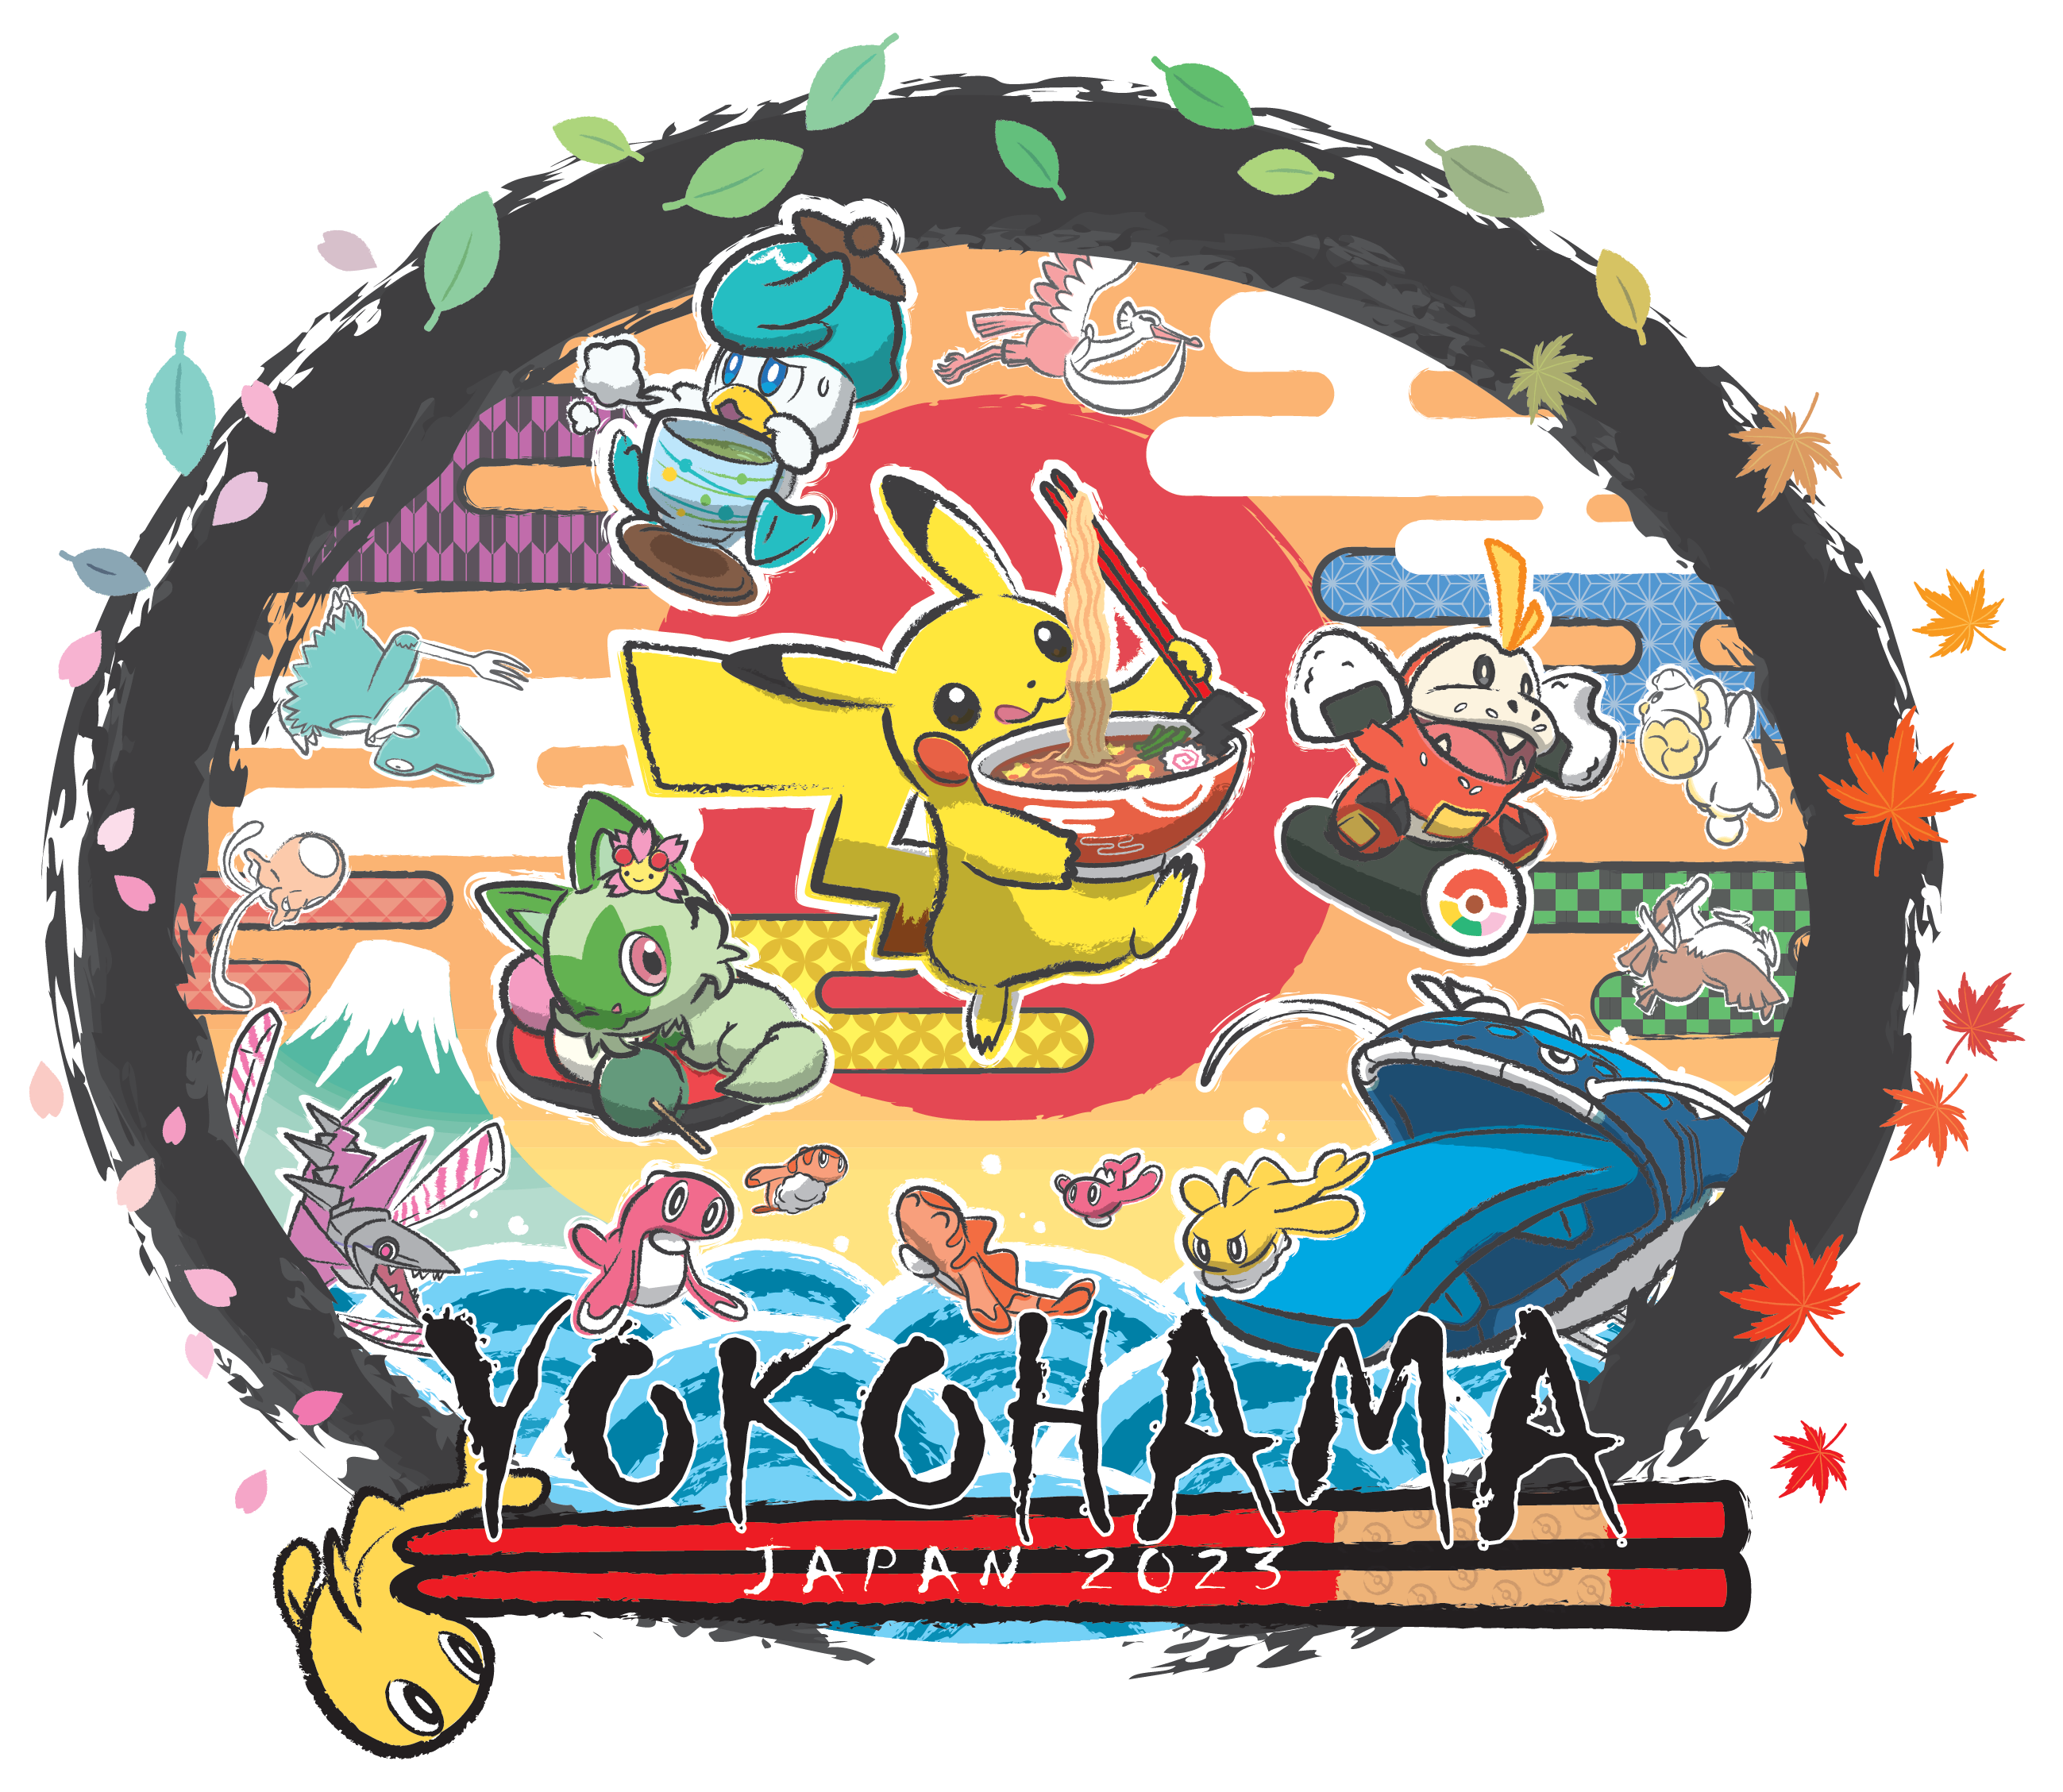 FR] Calendrier des sorties JCC Pokémon 2024 - Pokécardex - Forum